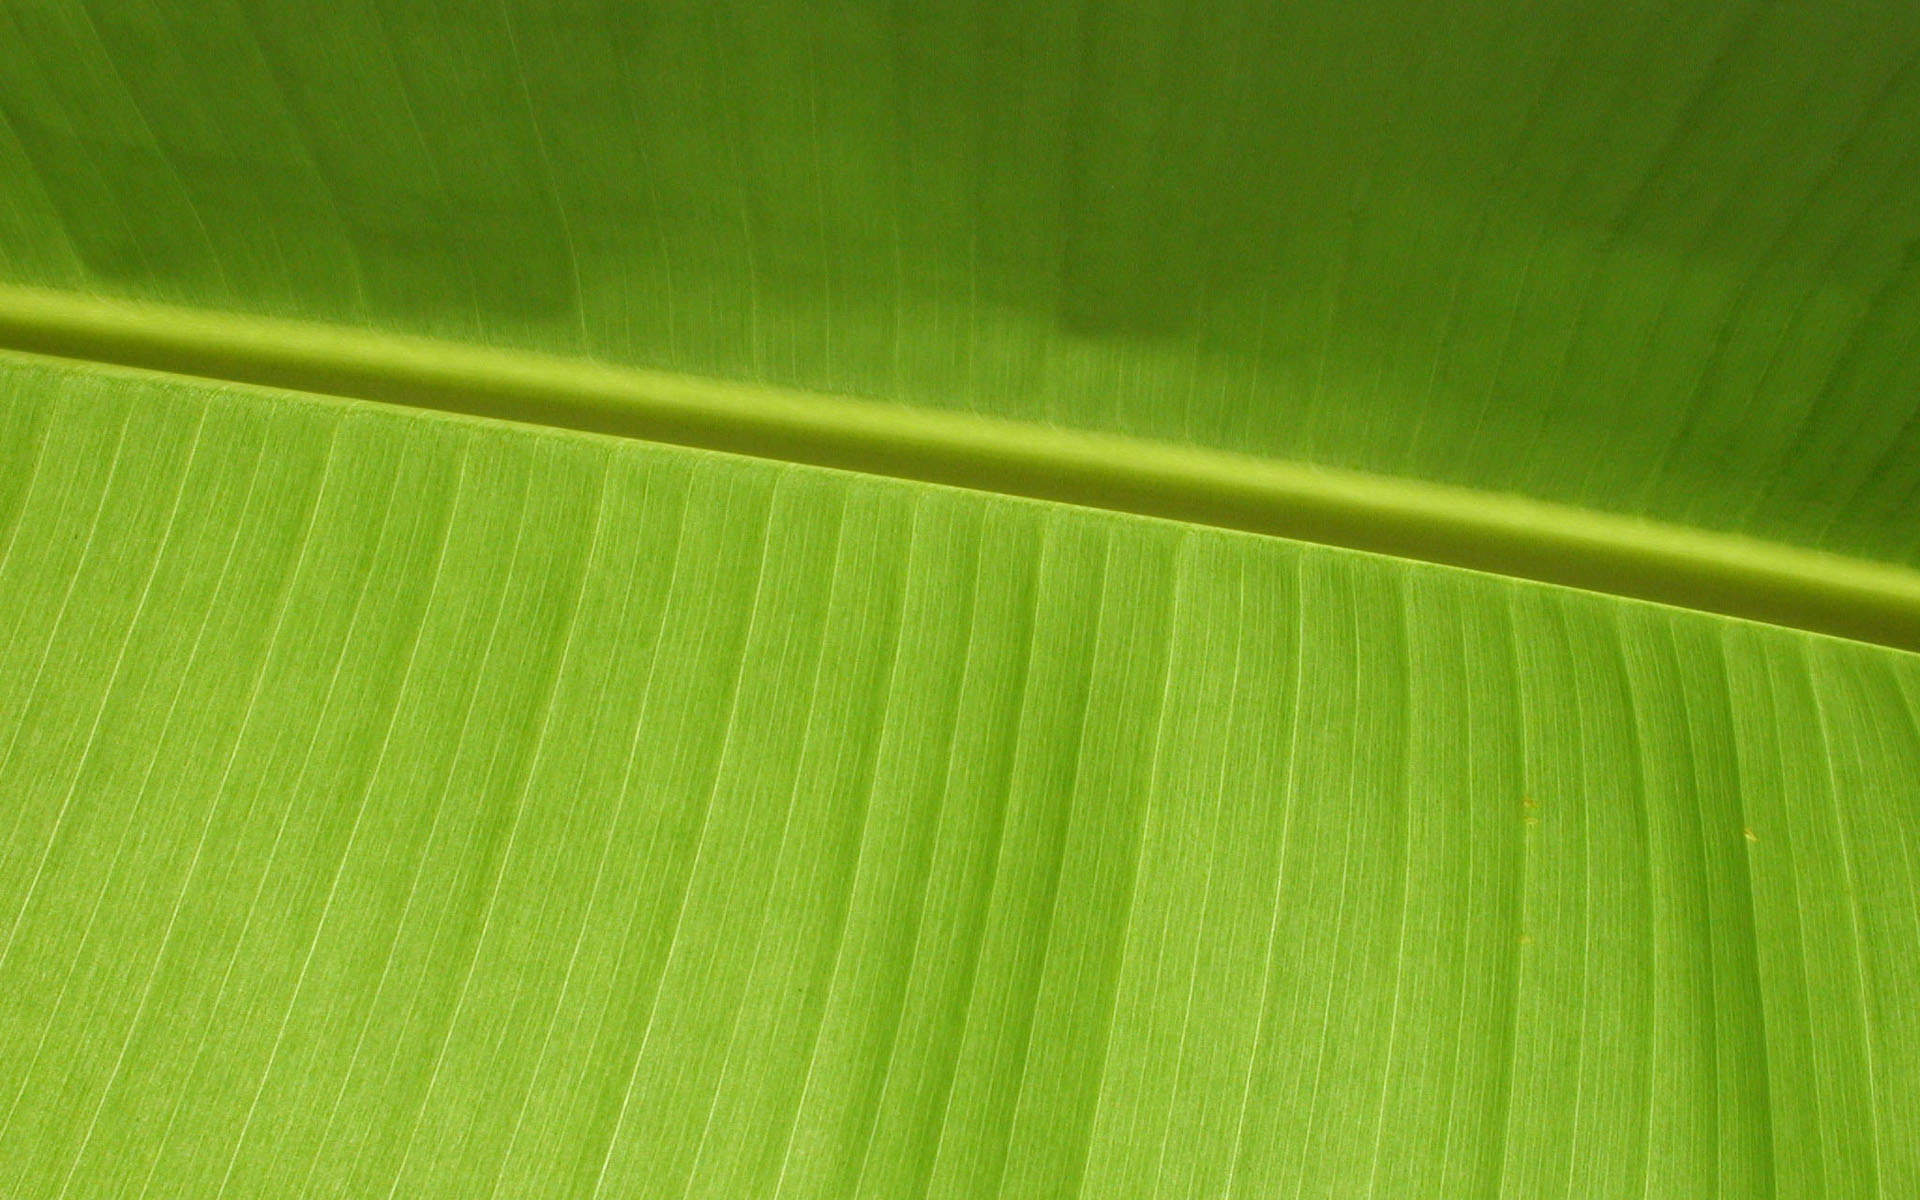 Previous, Nature - Plants - Green leaf wallpaper